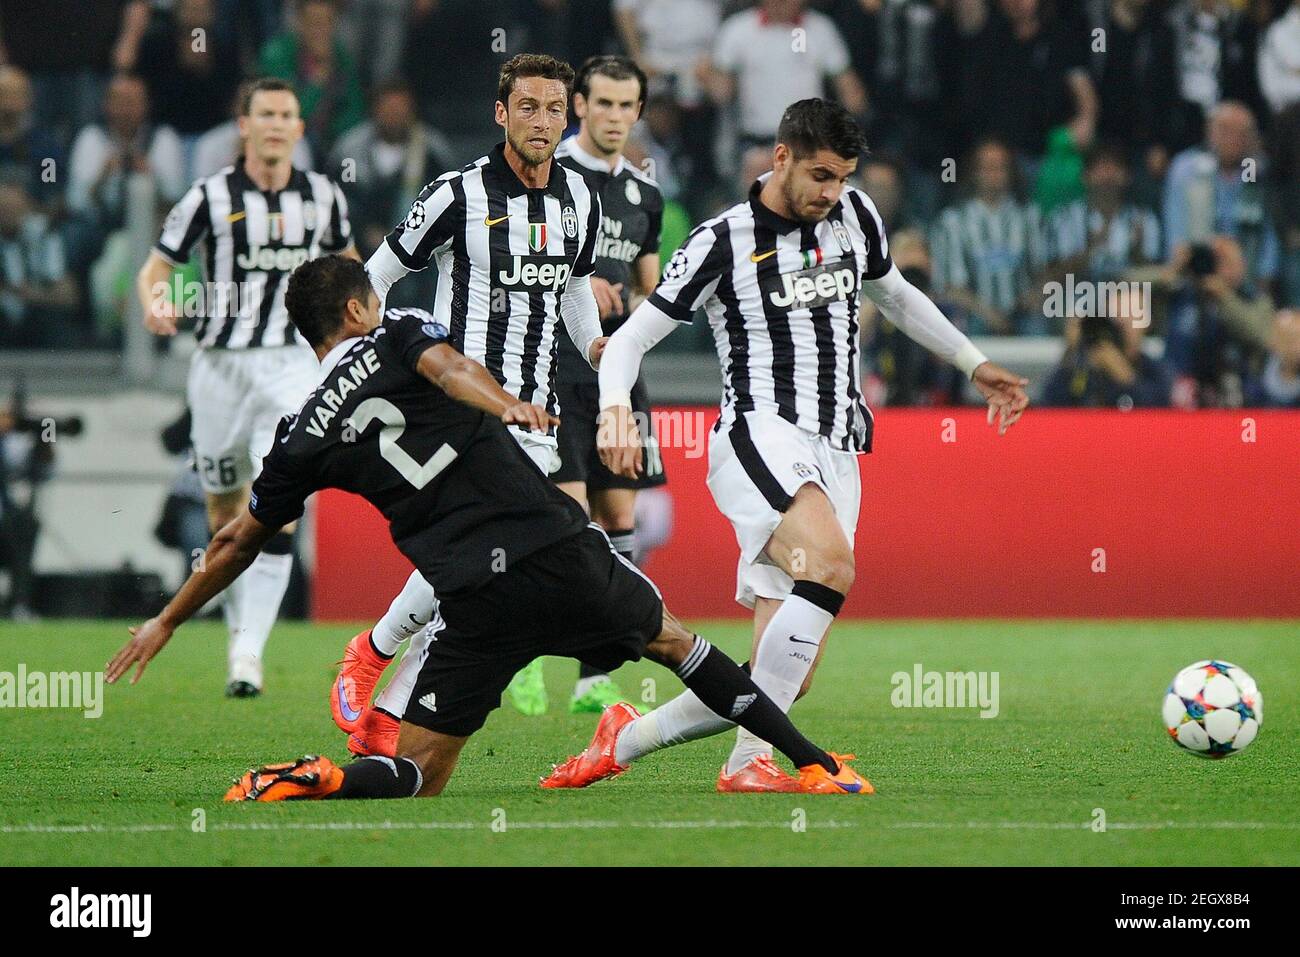 Football - Juventus v Real Madrid - UEFA Champions League Semi Final First  Leg - Juventus Stadium, Turin, Italy -